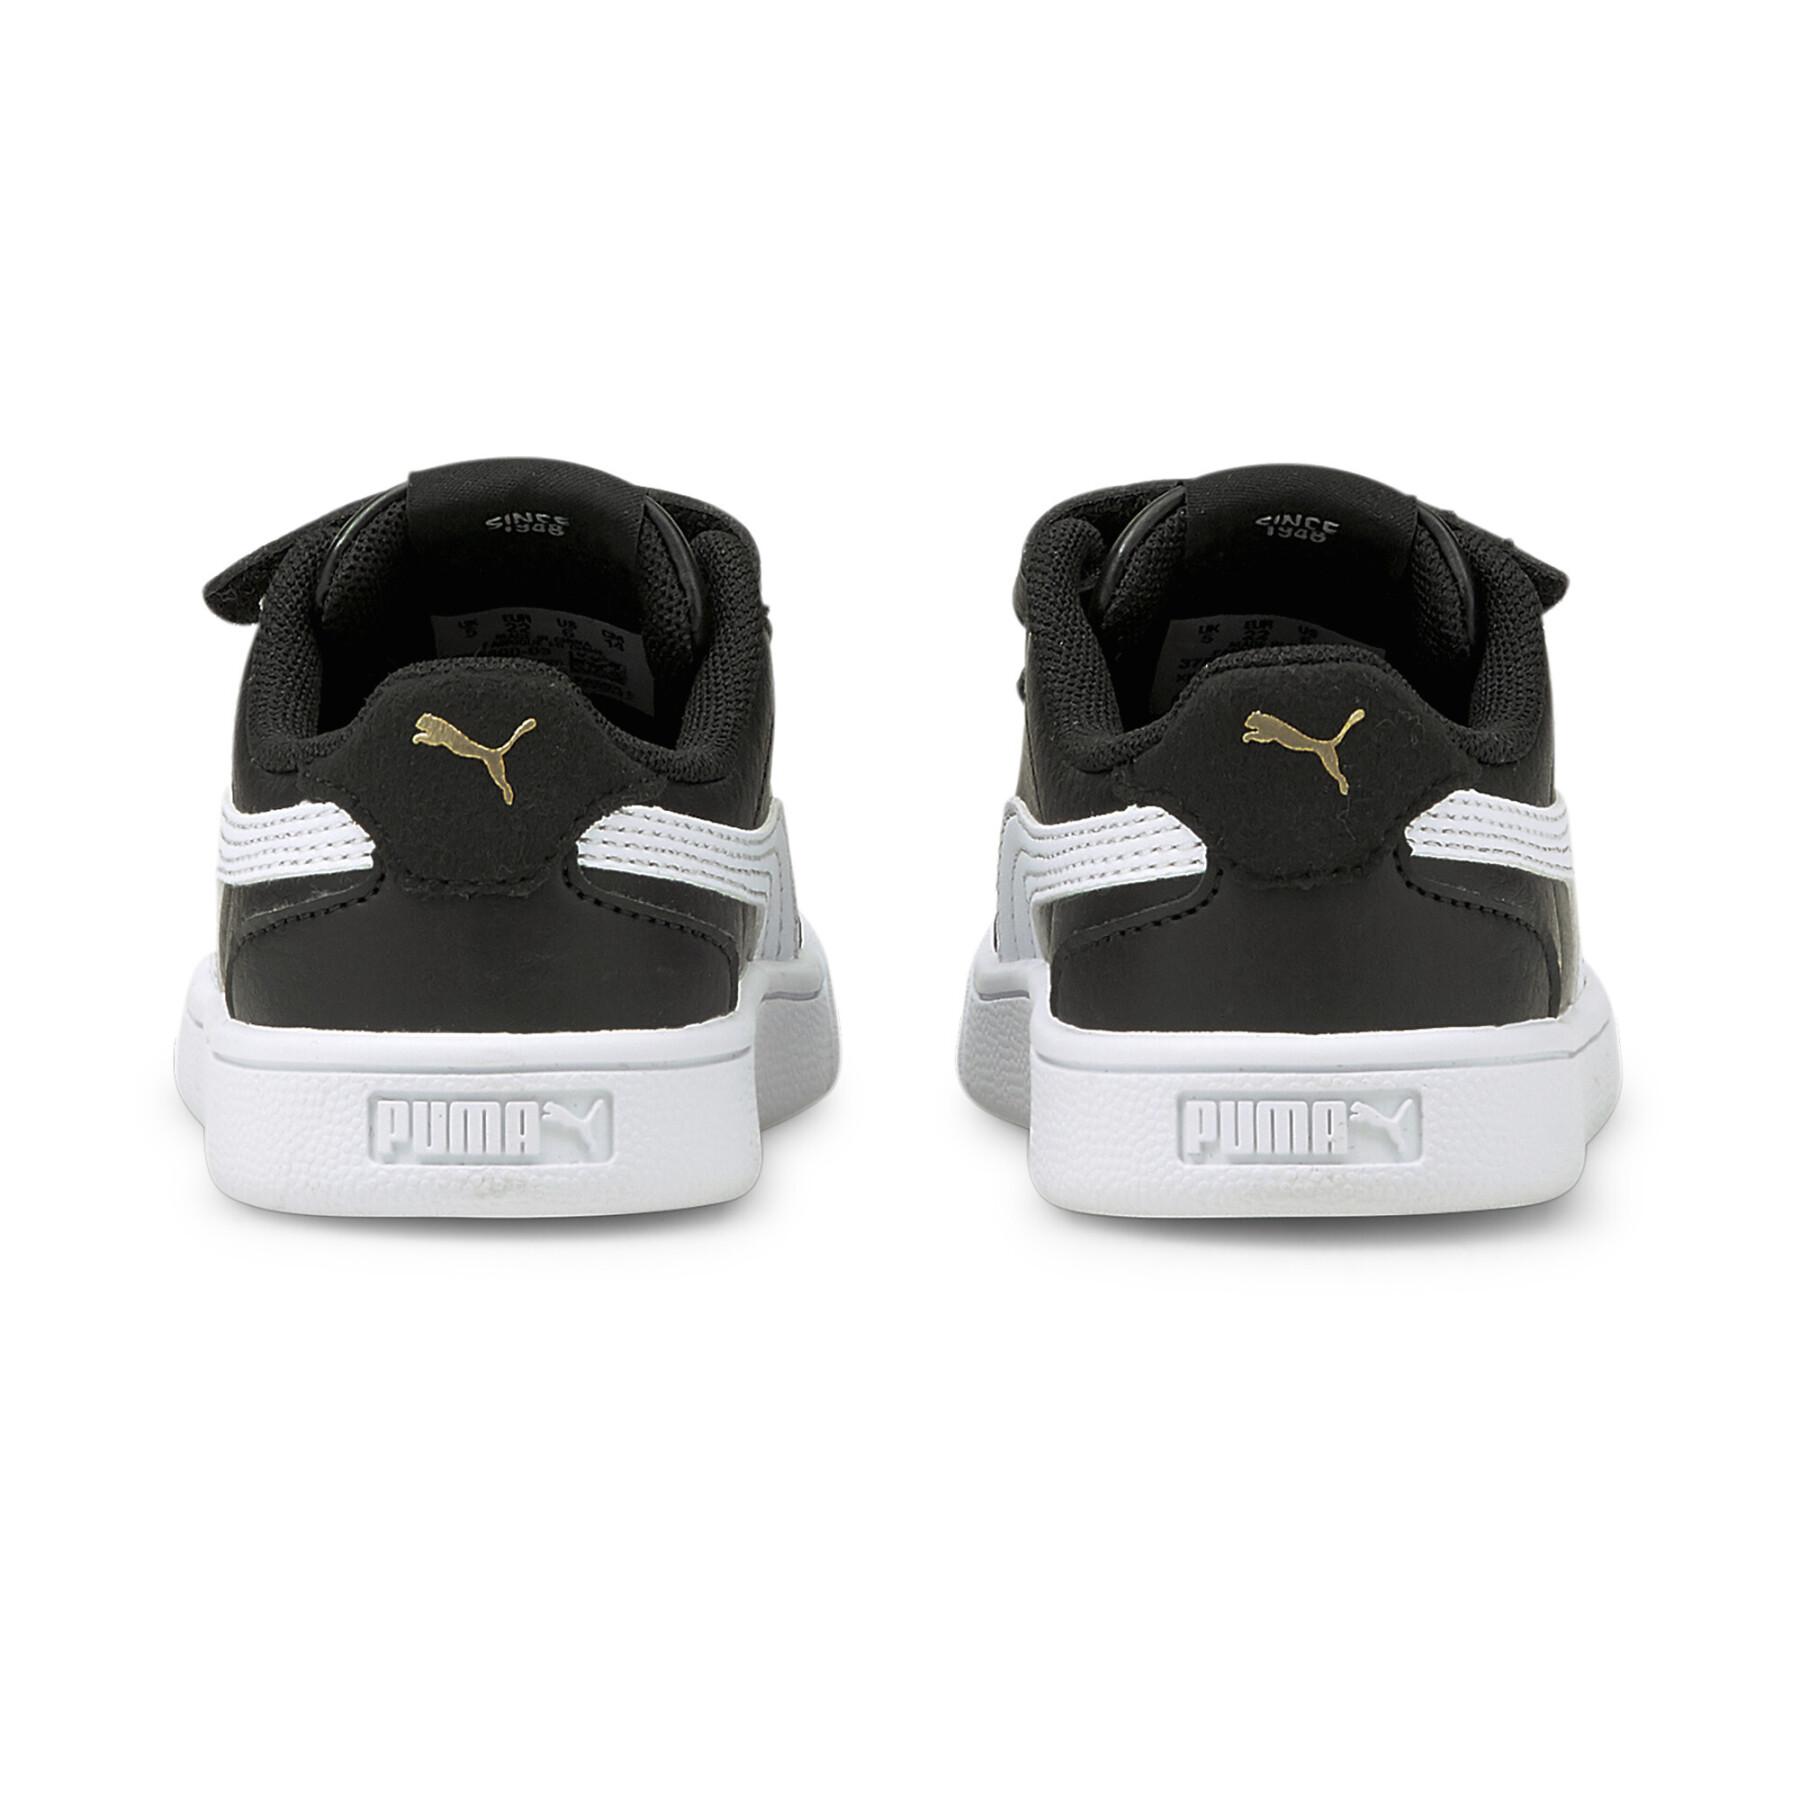 Children's sneakers Puma Shuffle V